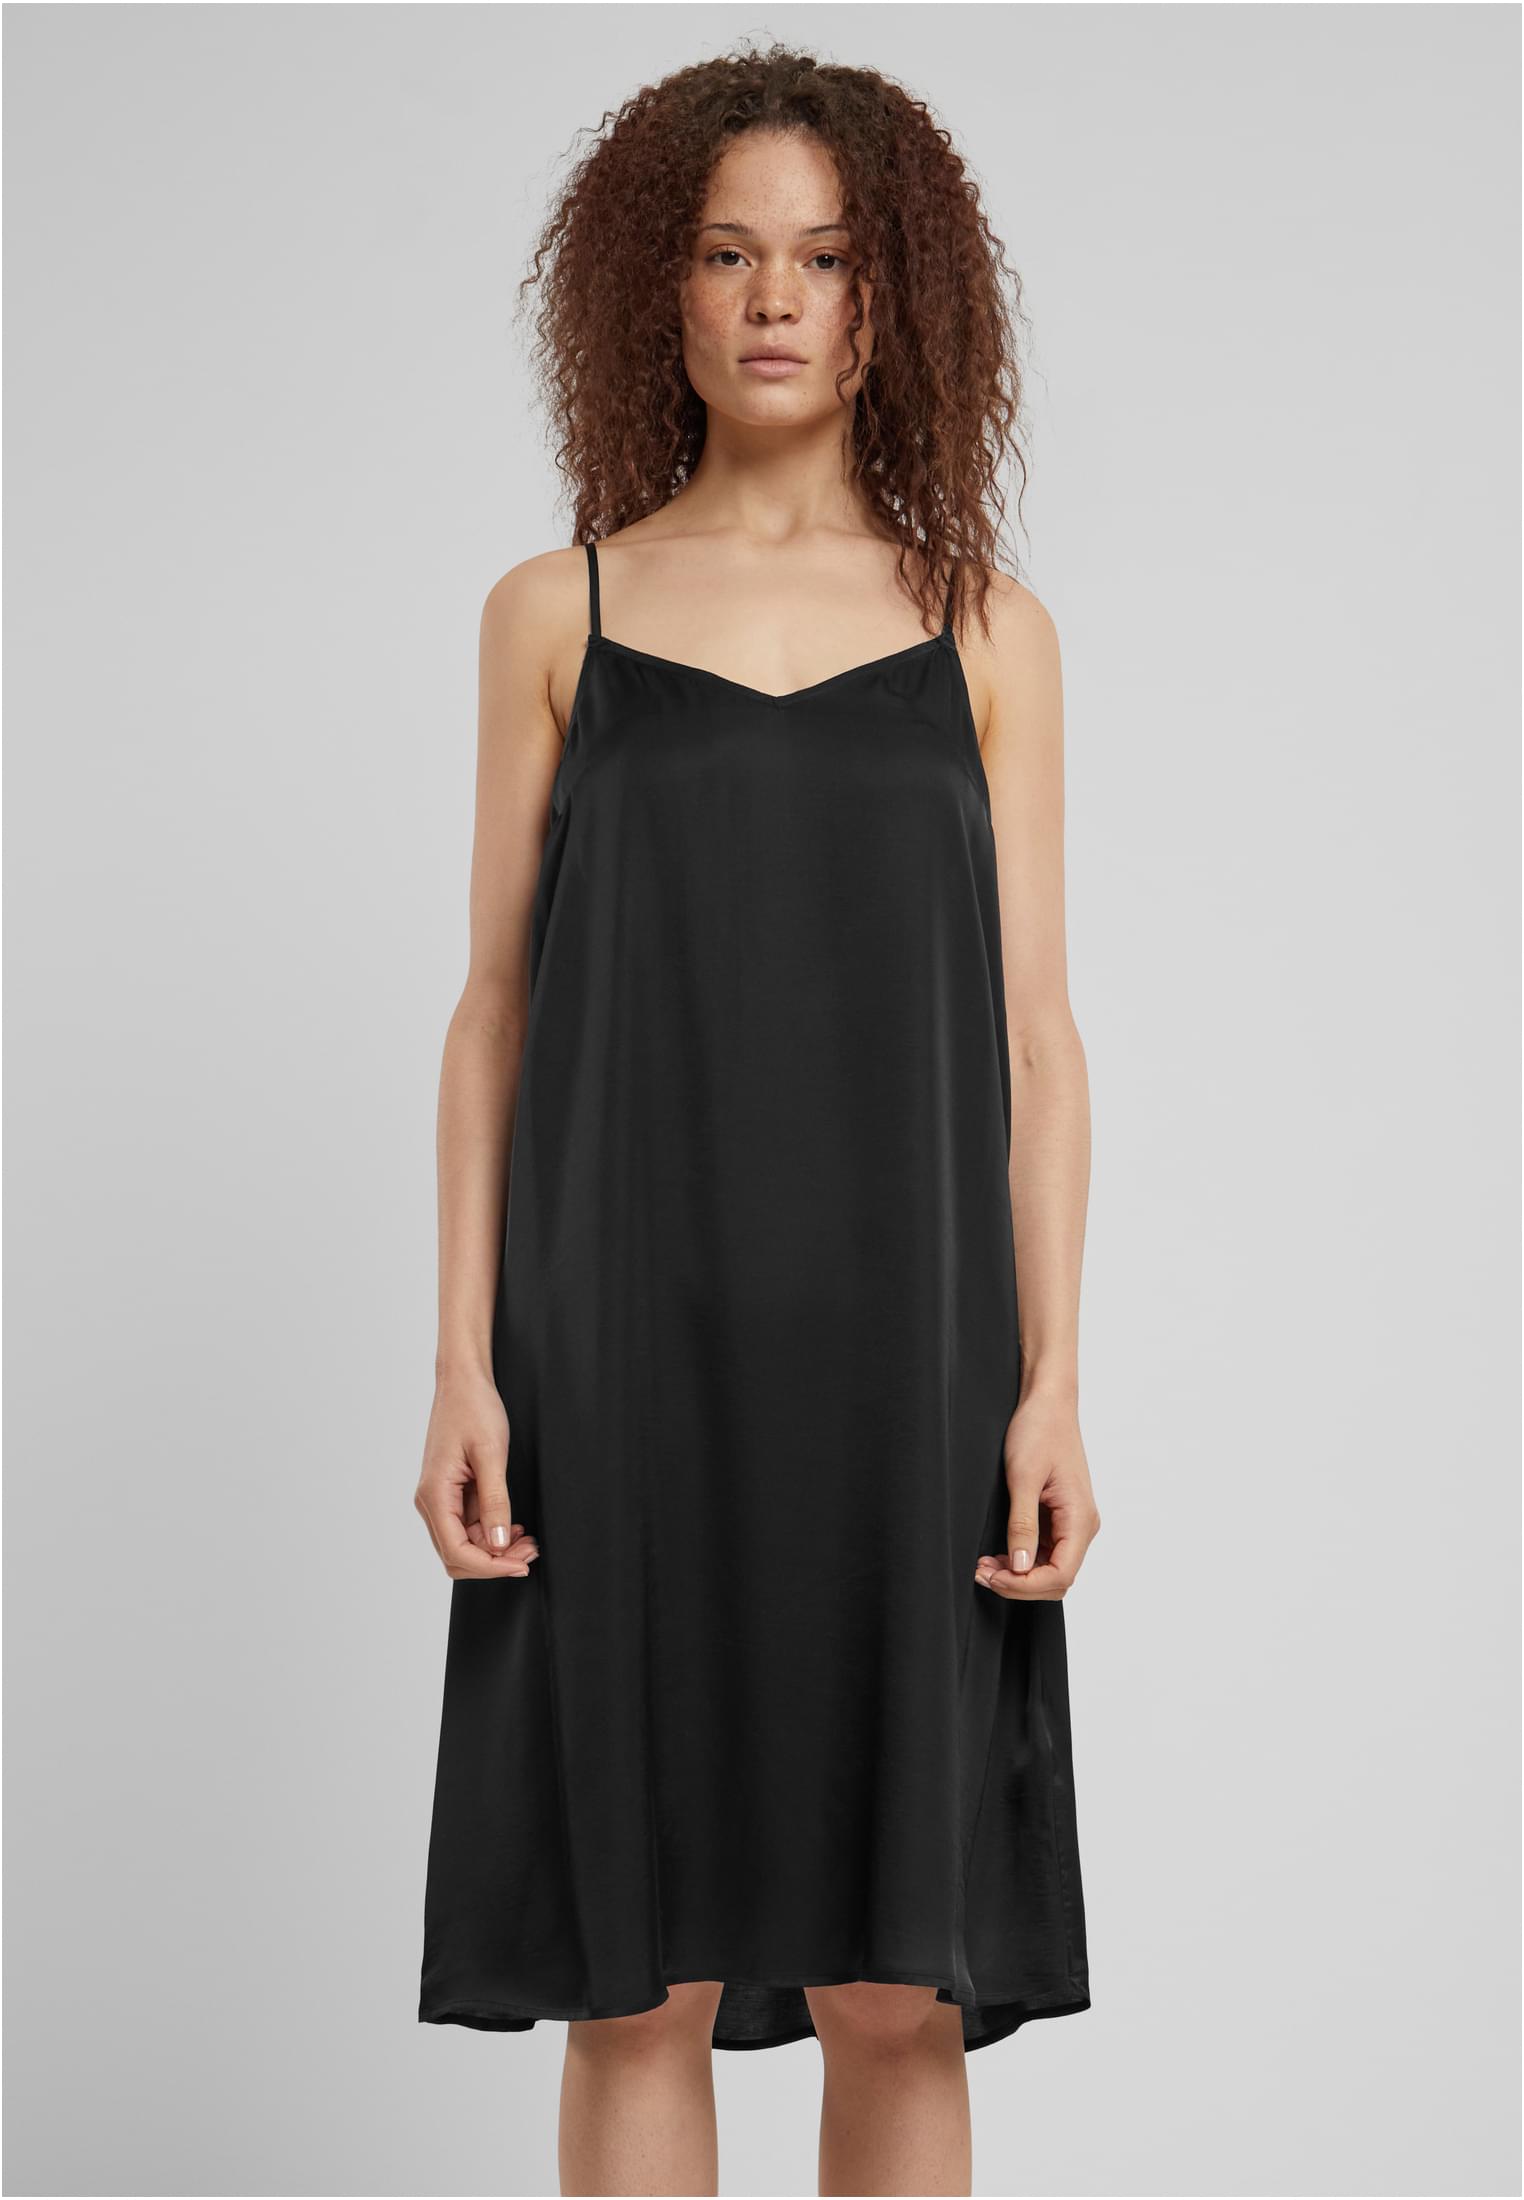 Women's Viscose Satin Nightgown - Black